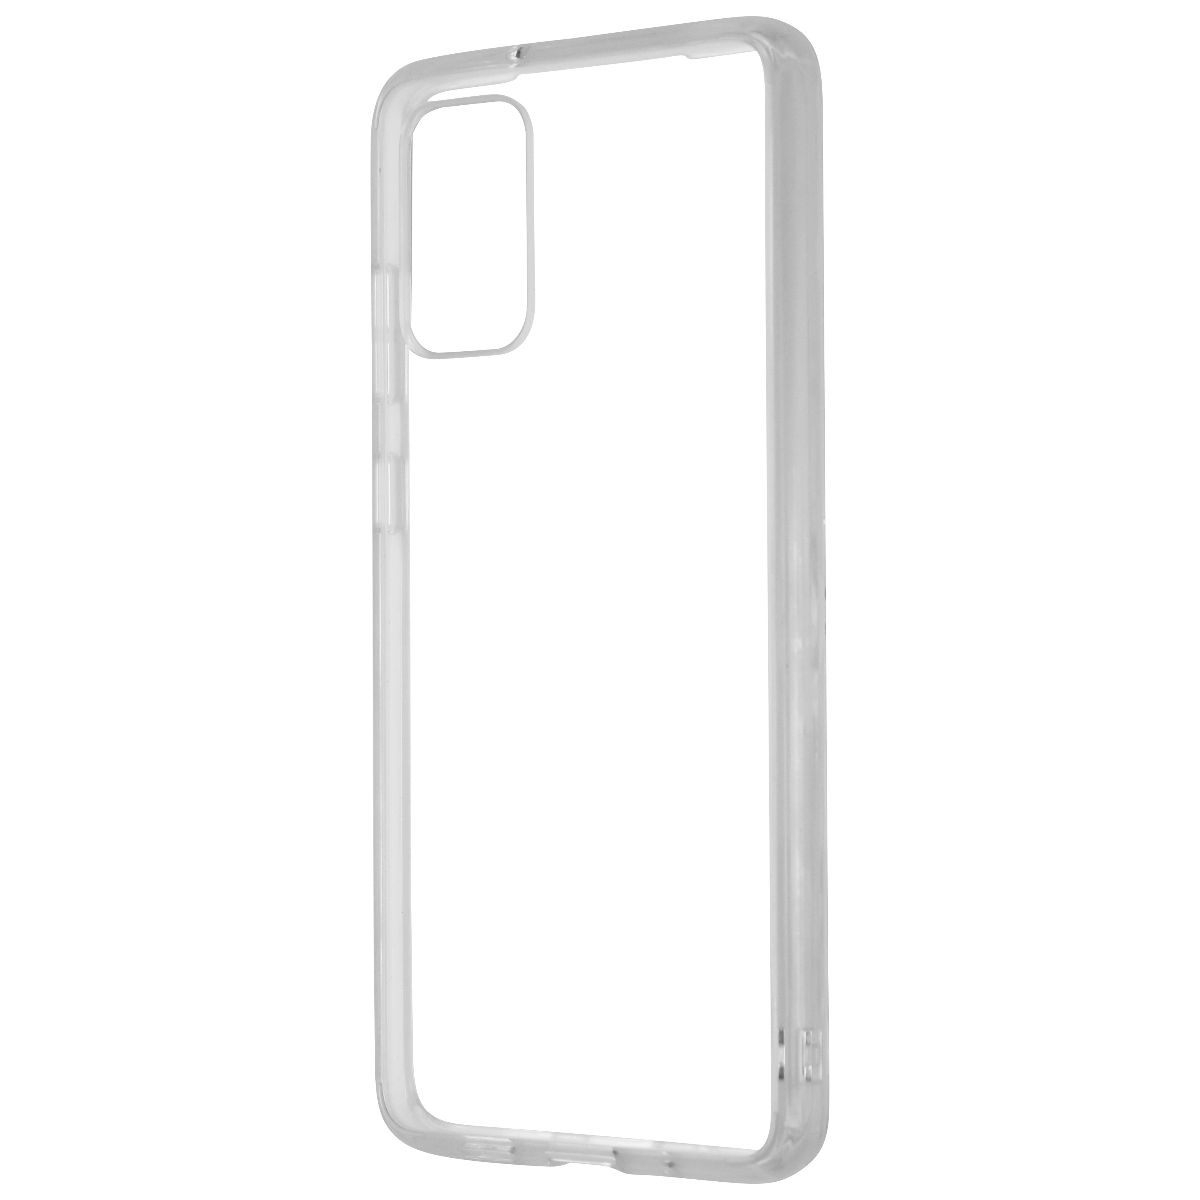 UBREAKIFIX Hardshell Case For Samsung Galaxy S20+ - Clear